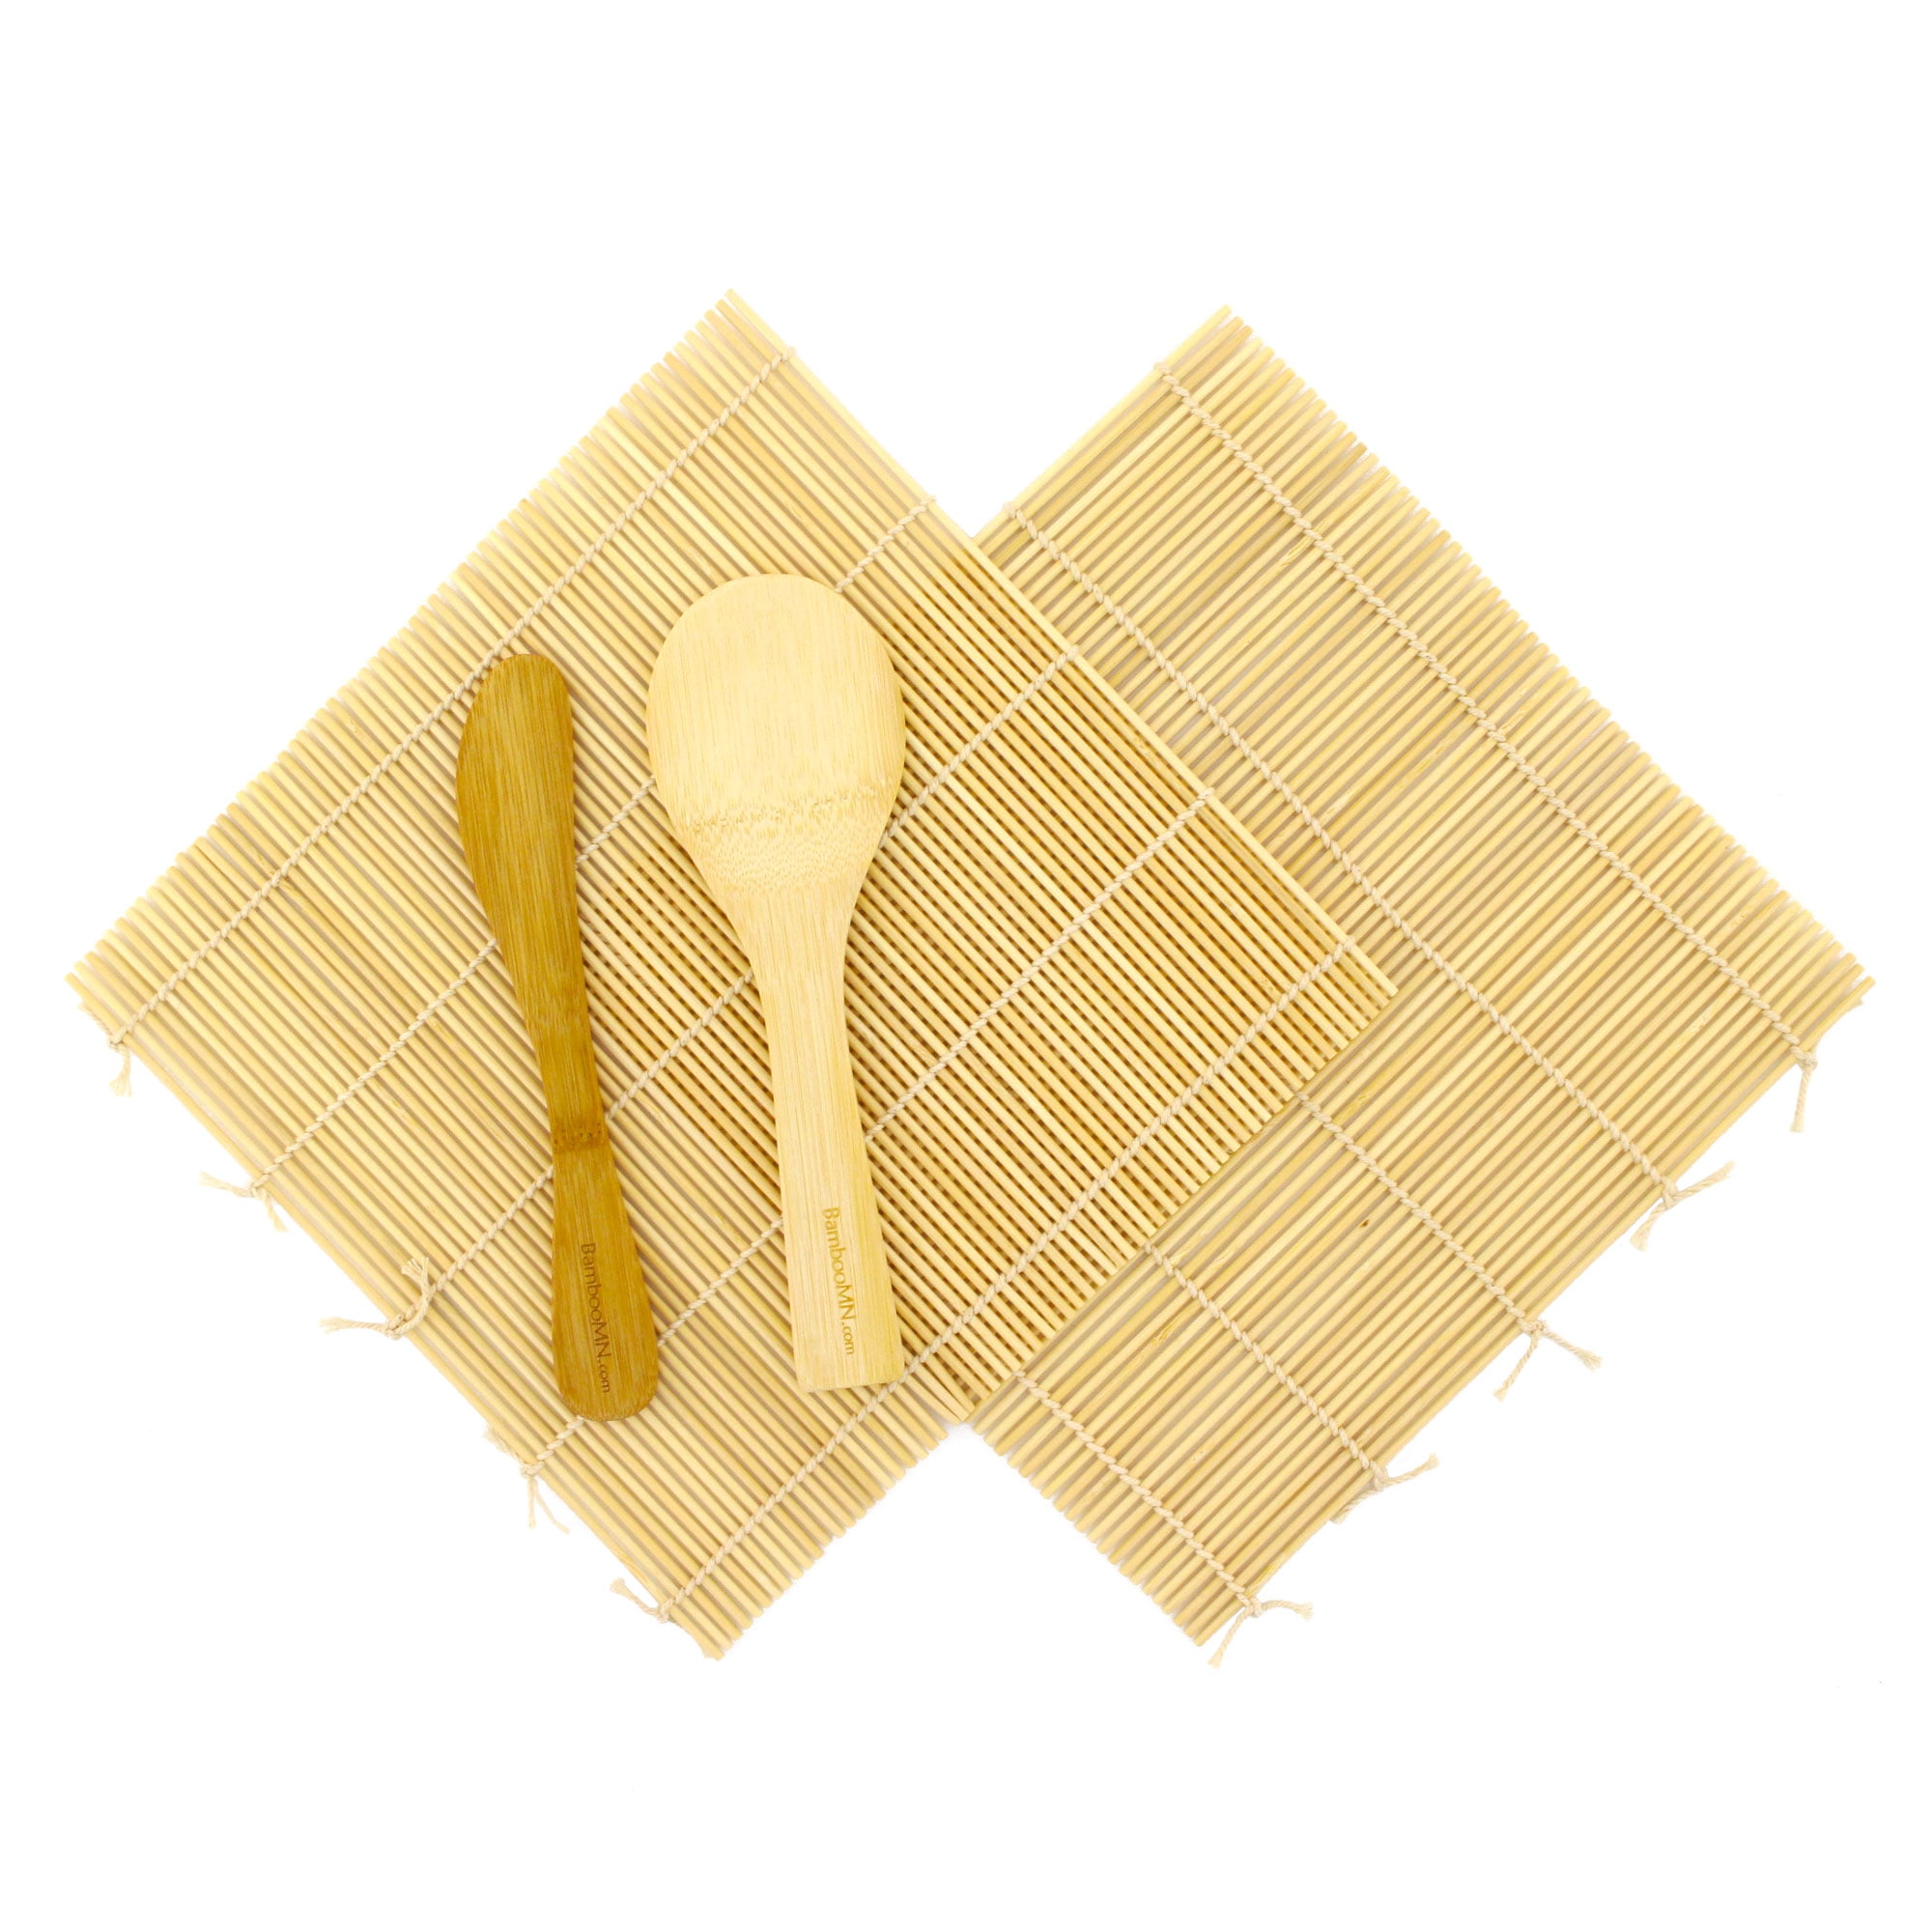 1x Spreader 1x Rice Paddle 100% Bamboo Mats and Utensils 6955114974416a BambooMN Sushi Making Kit 2x Natural Bamboo Rolling Mats